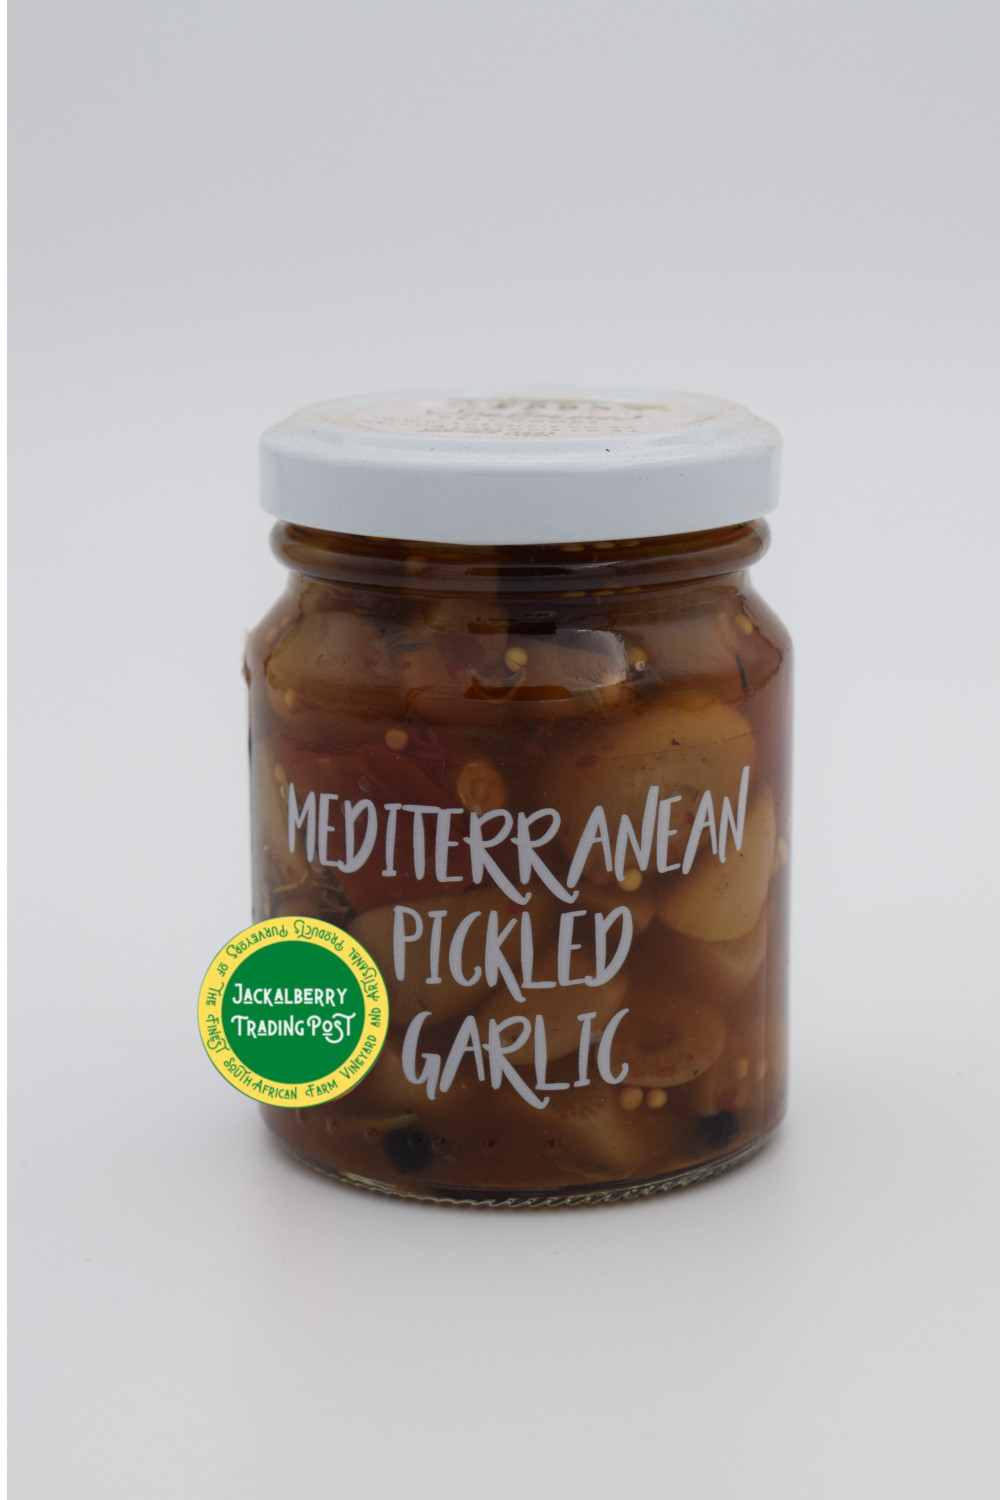 Soetmuis Deli Goods Mediterranean Pickled Garlic